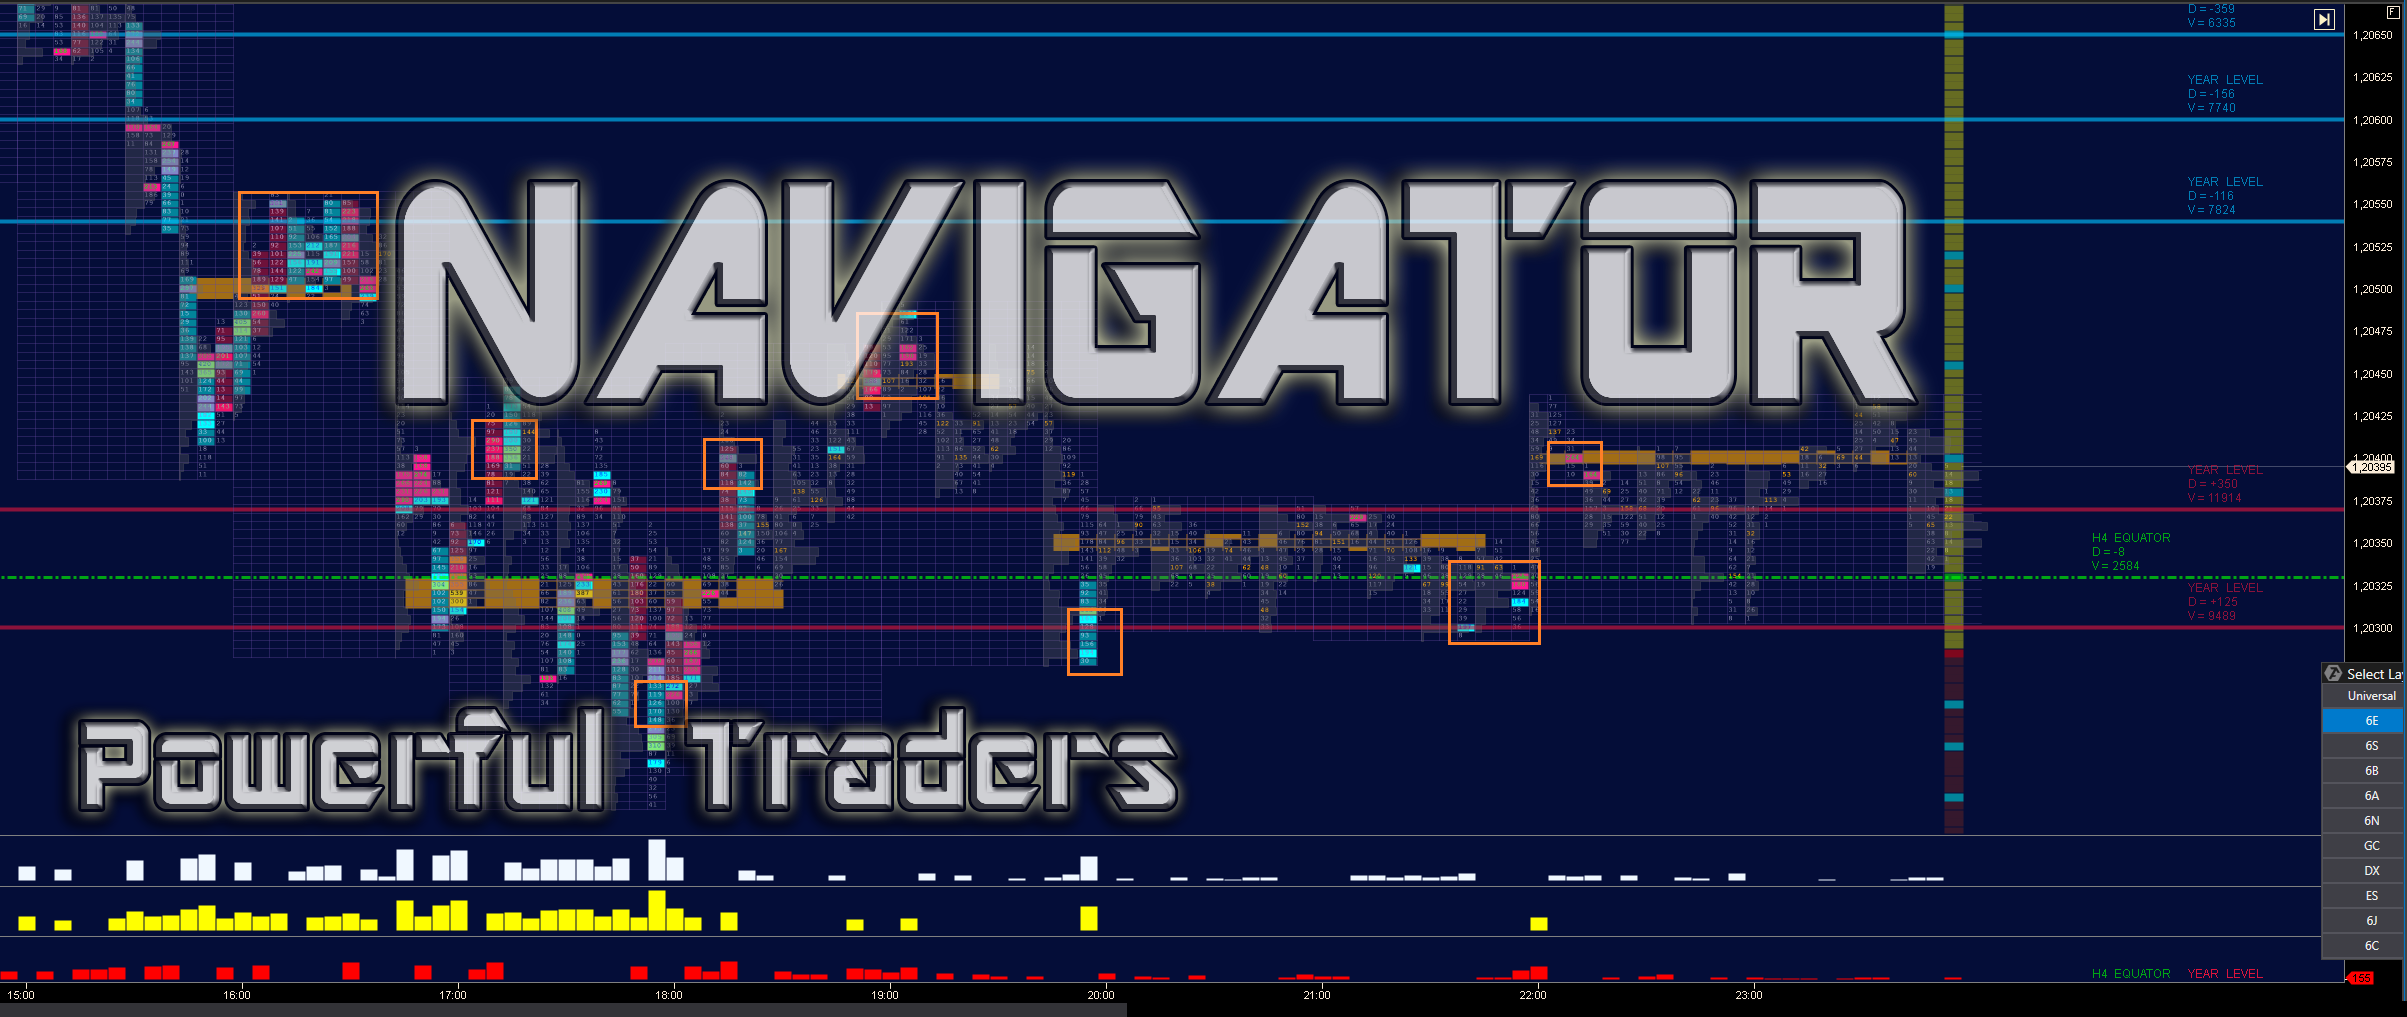 The “Navigator”algosystem, review for trading platform ...